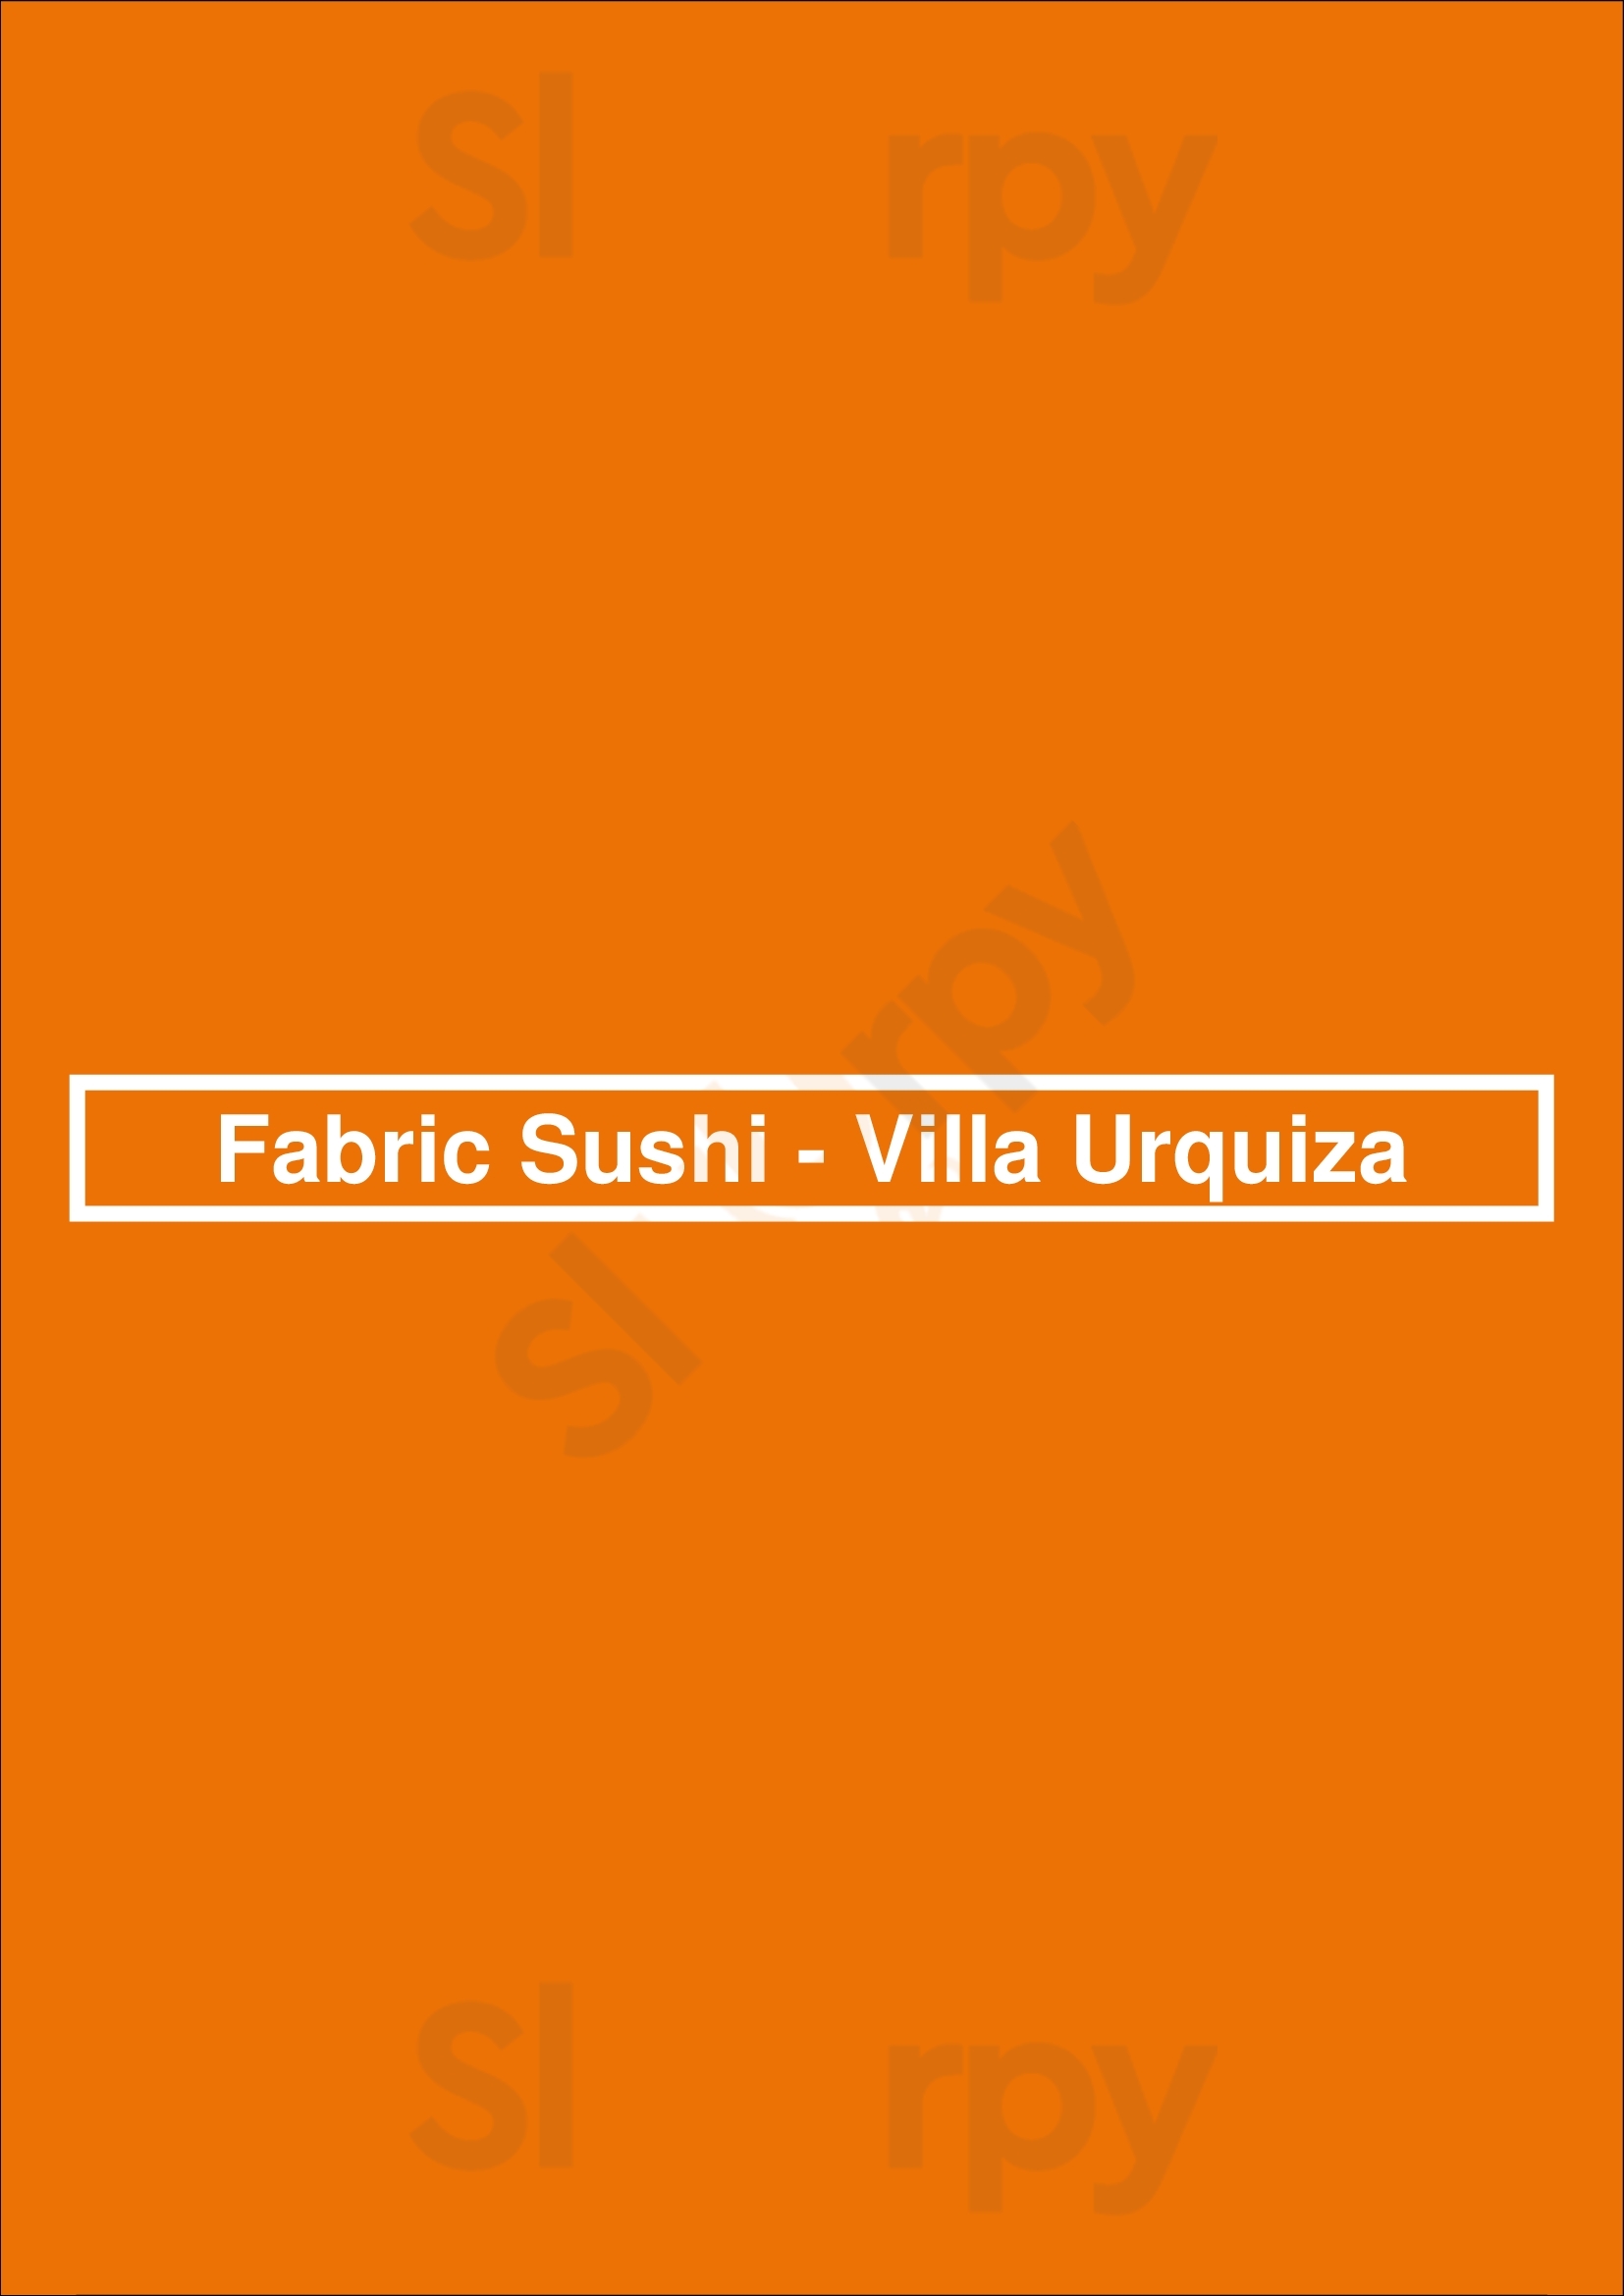 Fabric Sushi - Villa Urquiza Buenos Aires Menu - 1